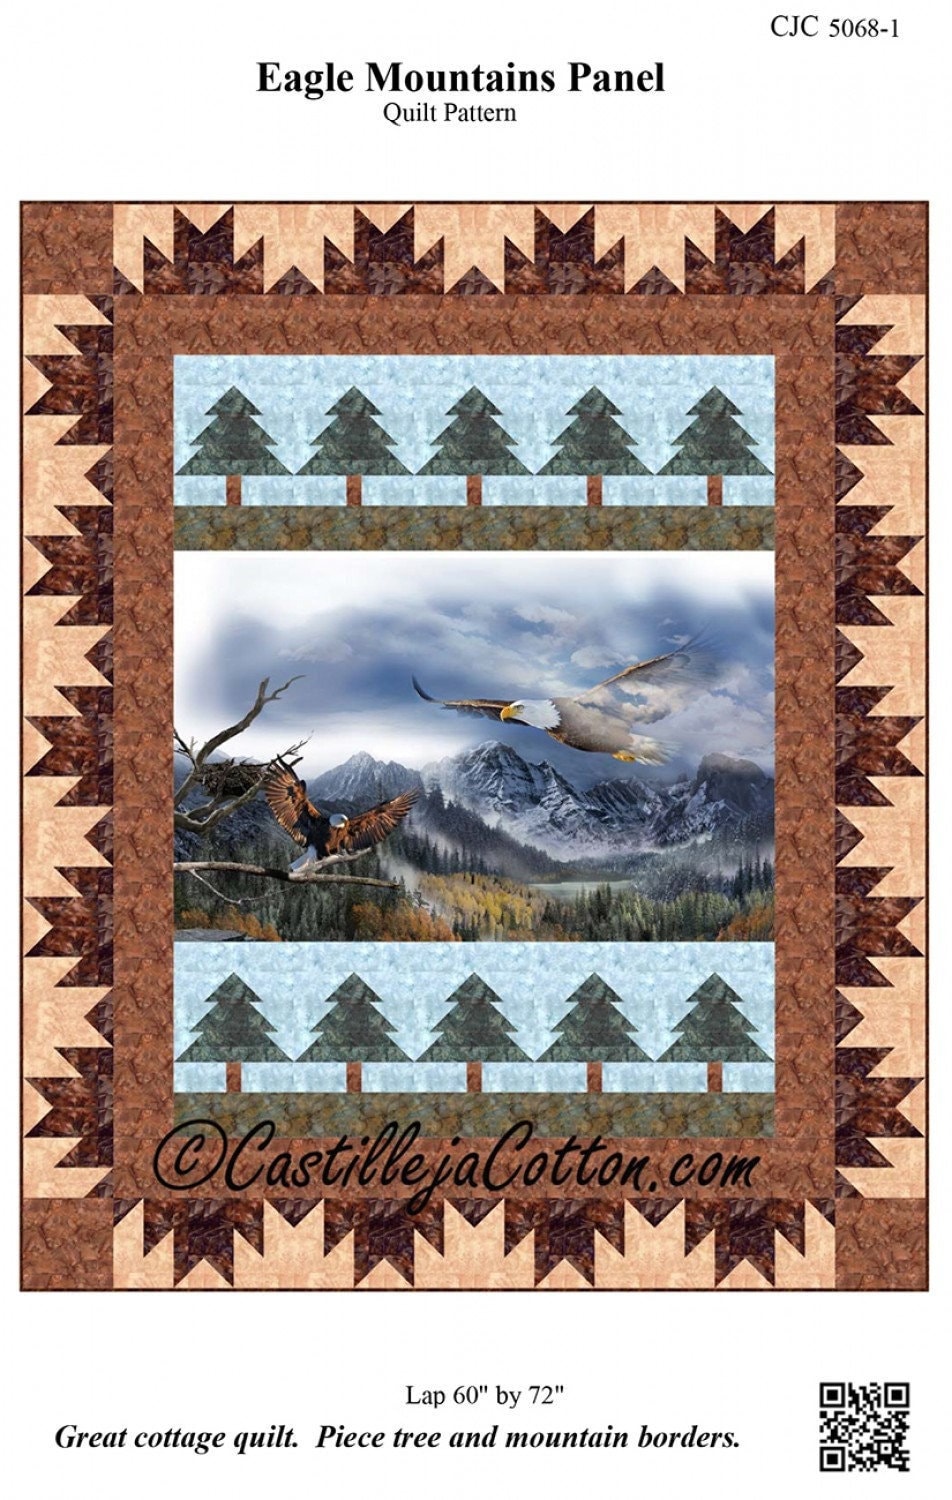 Eagle Mountain Panel Quilt Pattern, Castilleja Cotton CJC-50681, Horizontal Fabric Panel Quilt Pattern, Panel Friendly